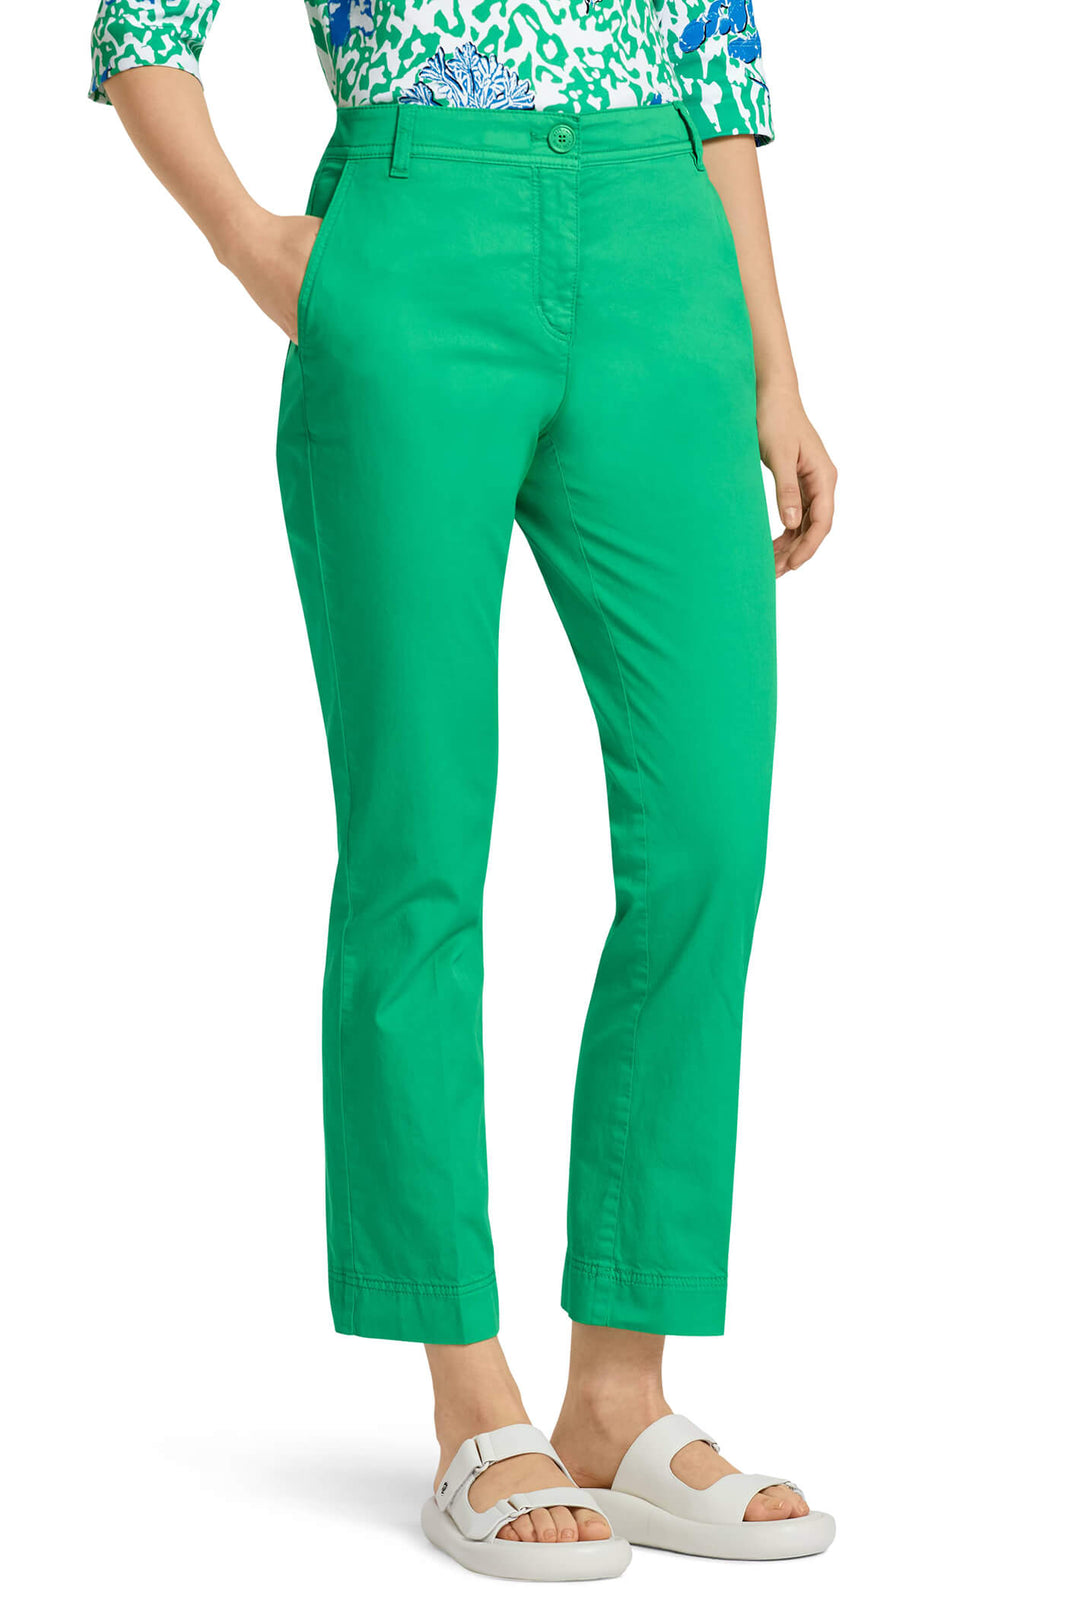 Marc Cain Sports US 81.43 W62 552 Bright Basil Leaf Green Trousers - Olivia Grace Fashion